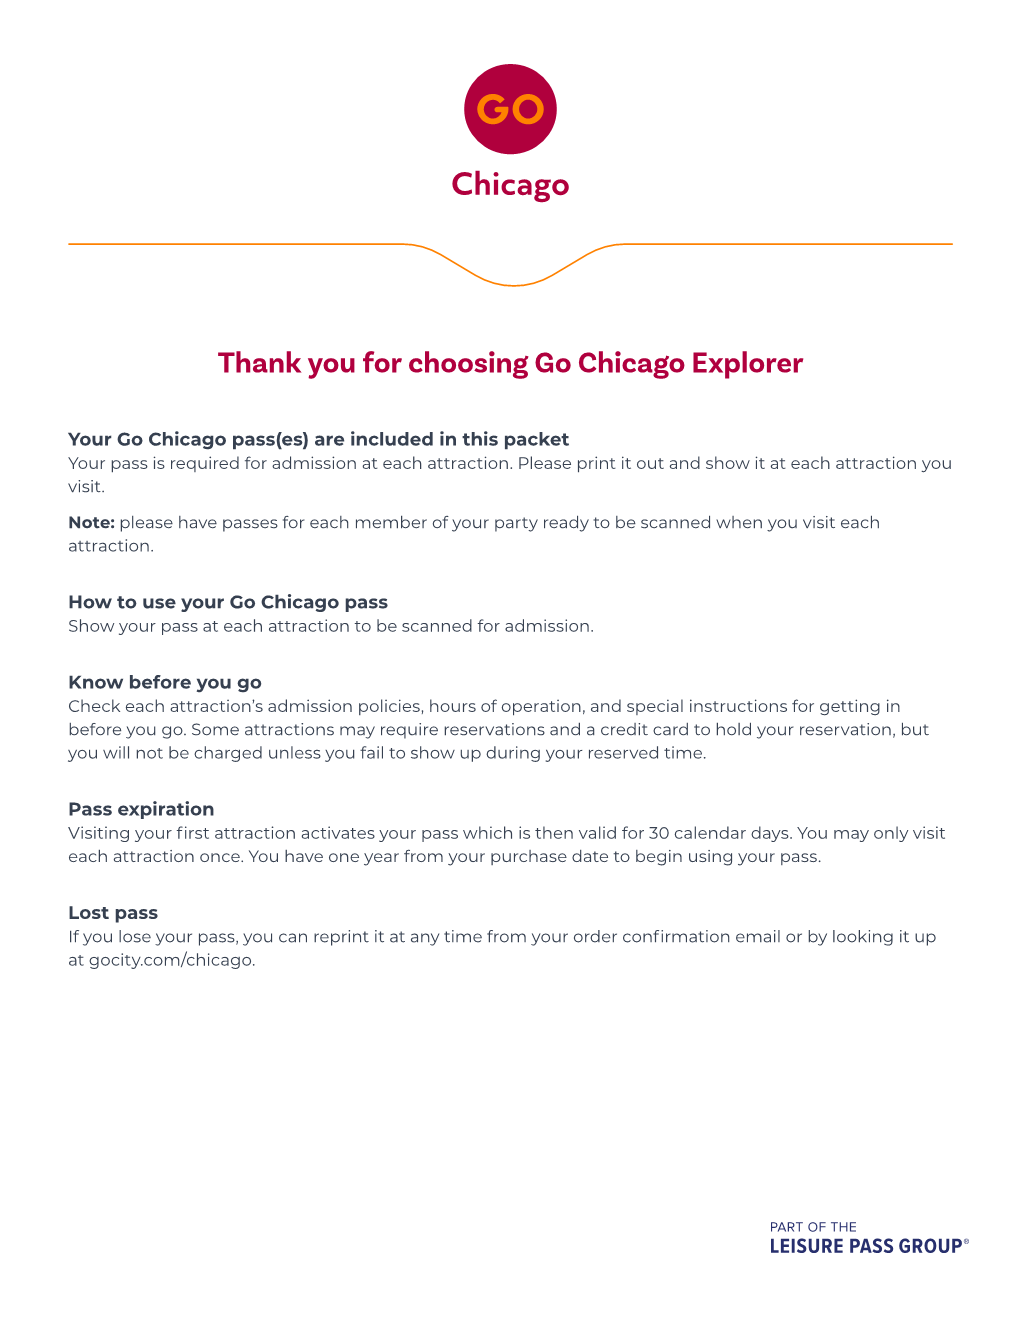 Thank You for Choosing Go Chicago Explorer